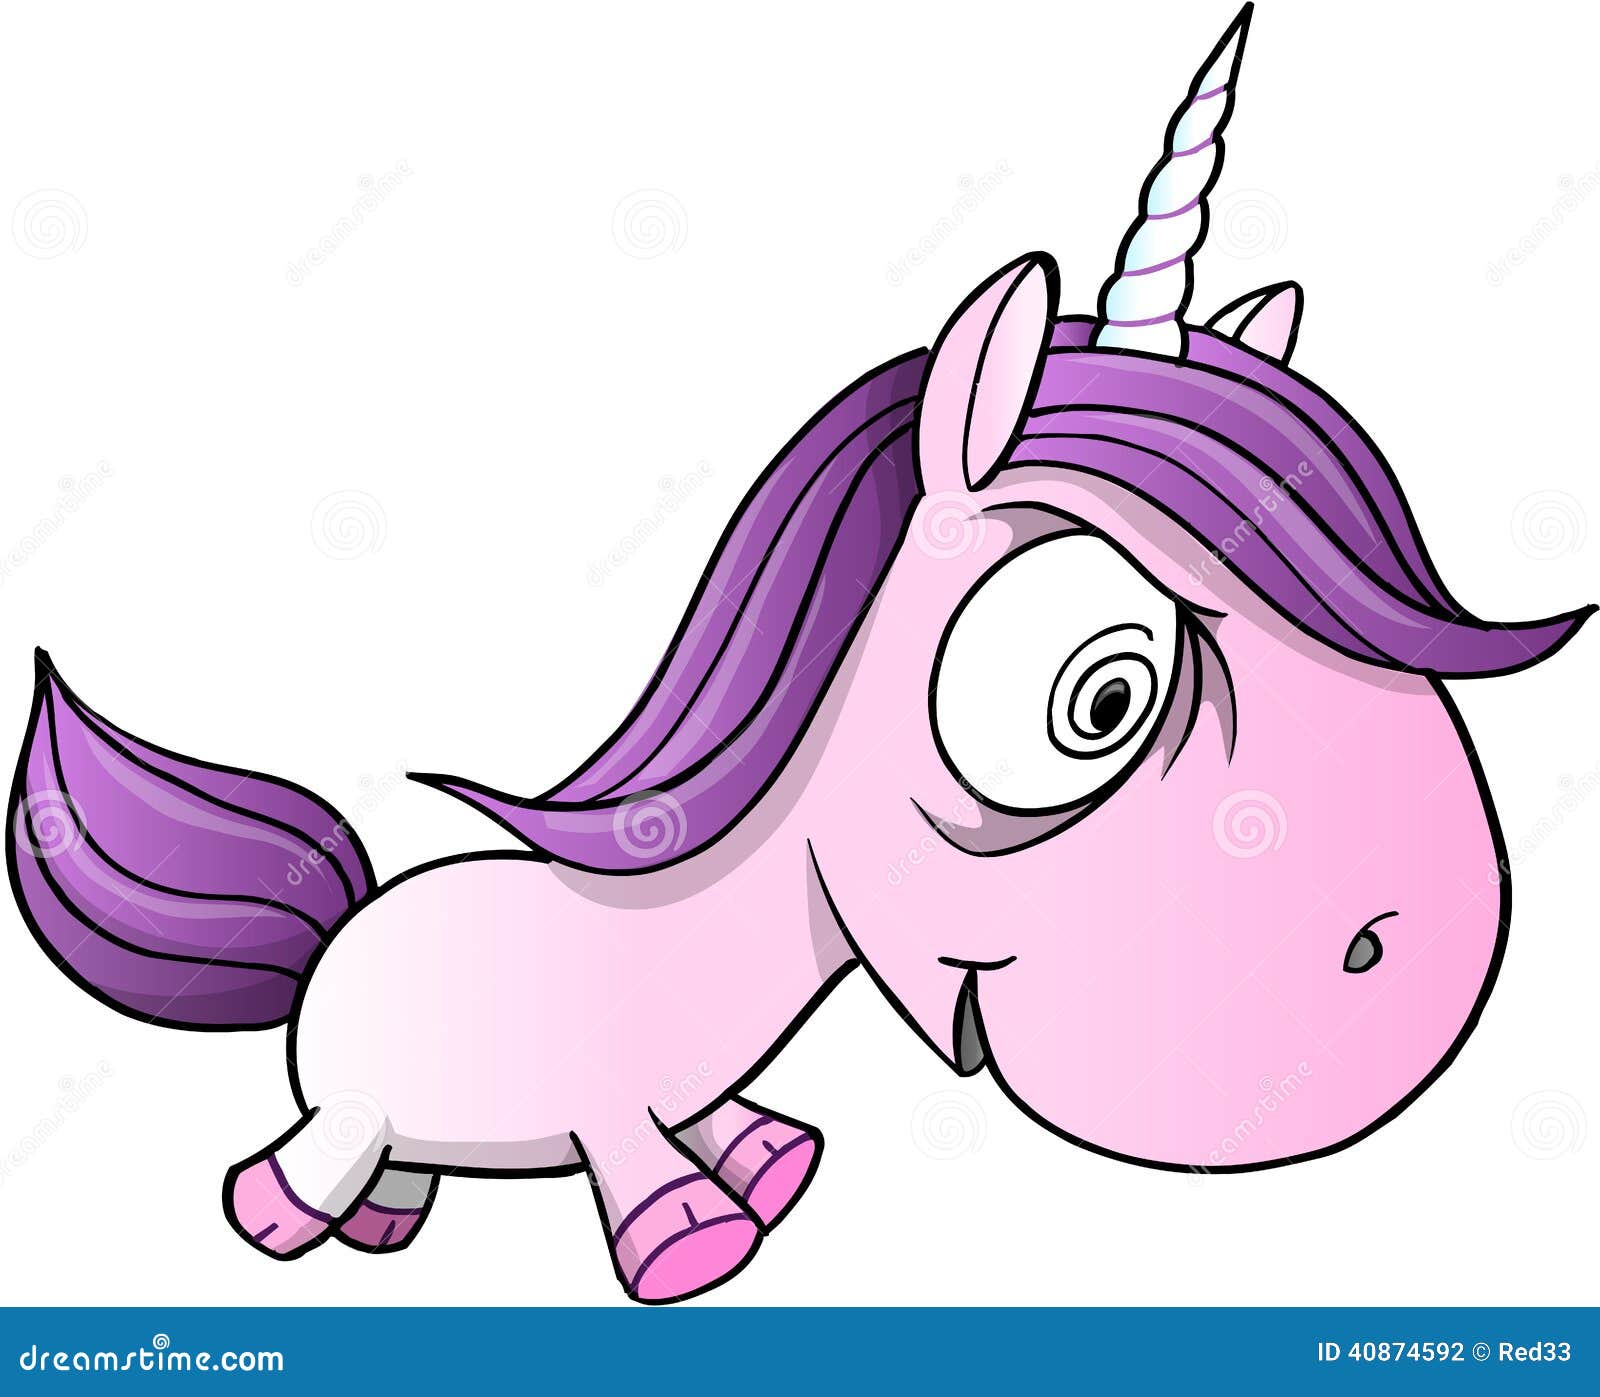 Download Crazy Insane Unicorn Vector Illustration Stock Vector ...